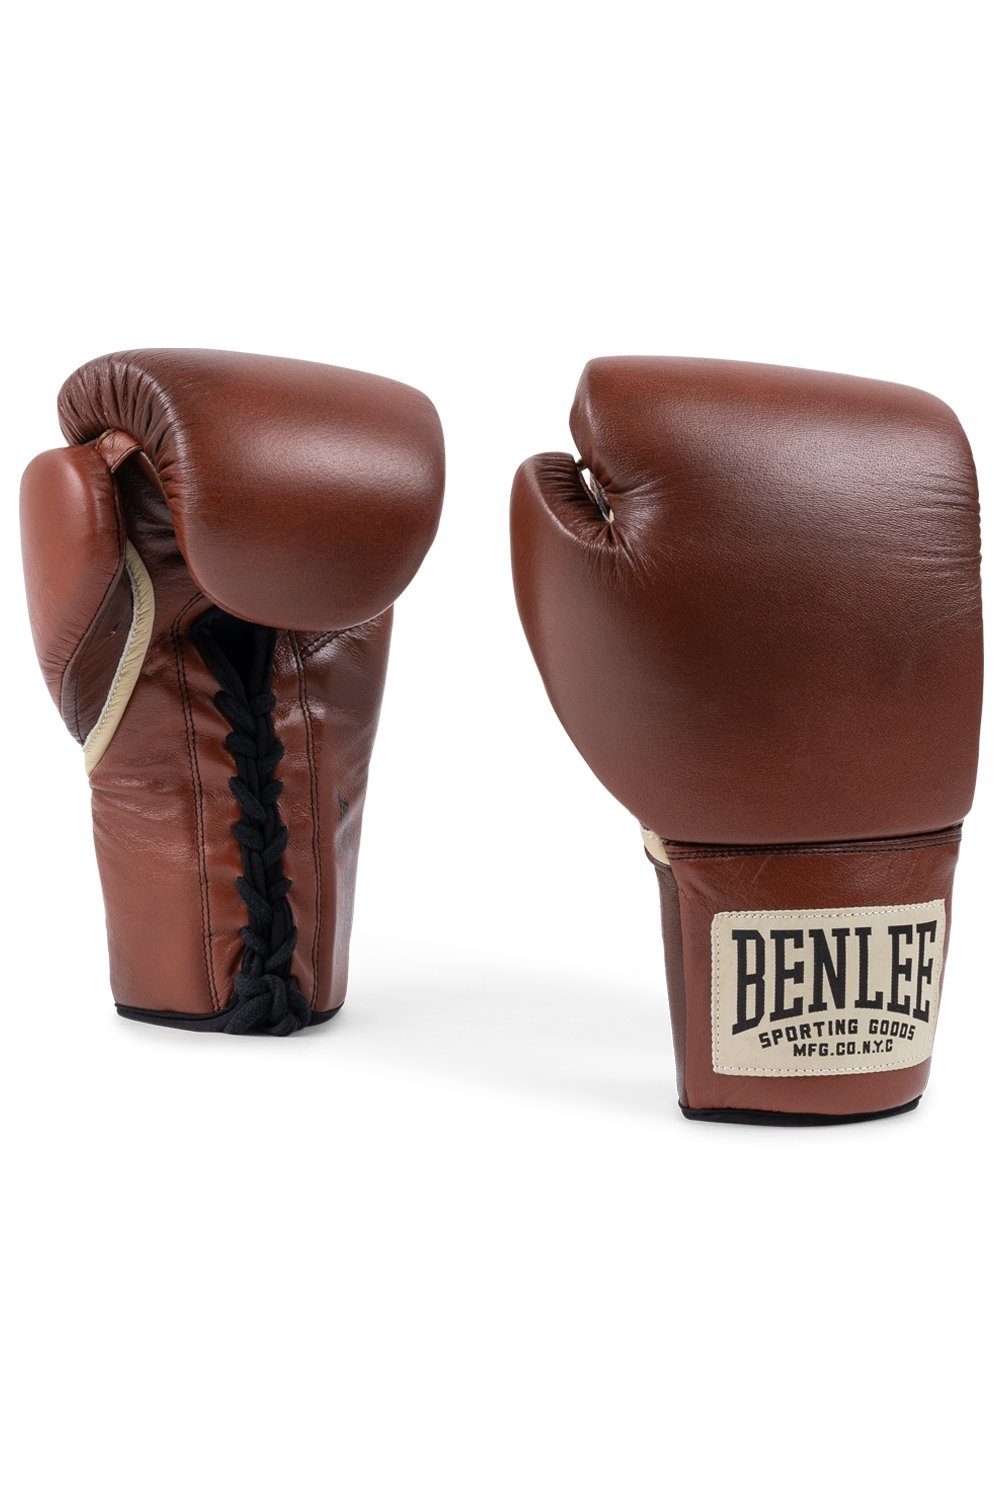 Benlee Rocky Marciano Boxhandschuhe CONTEST PREMIUM